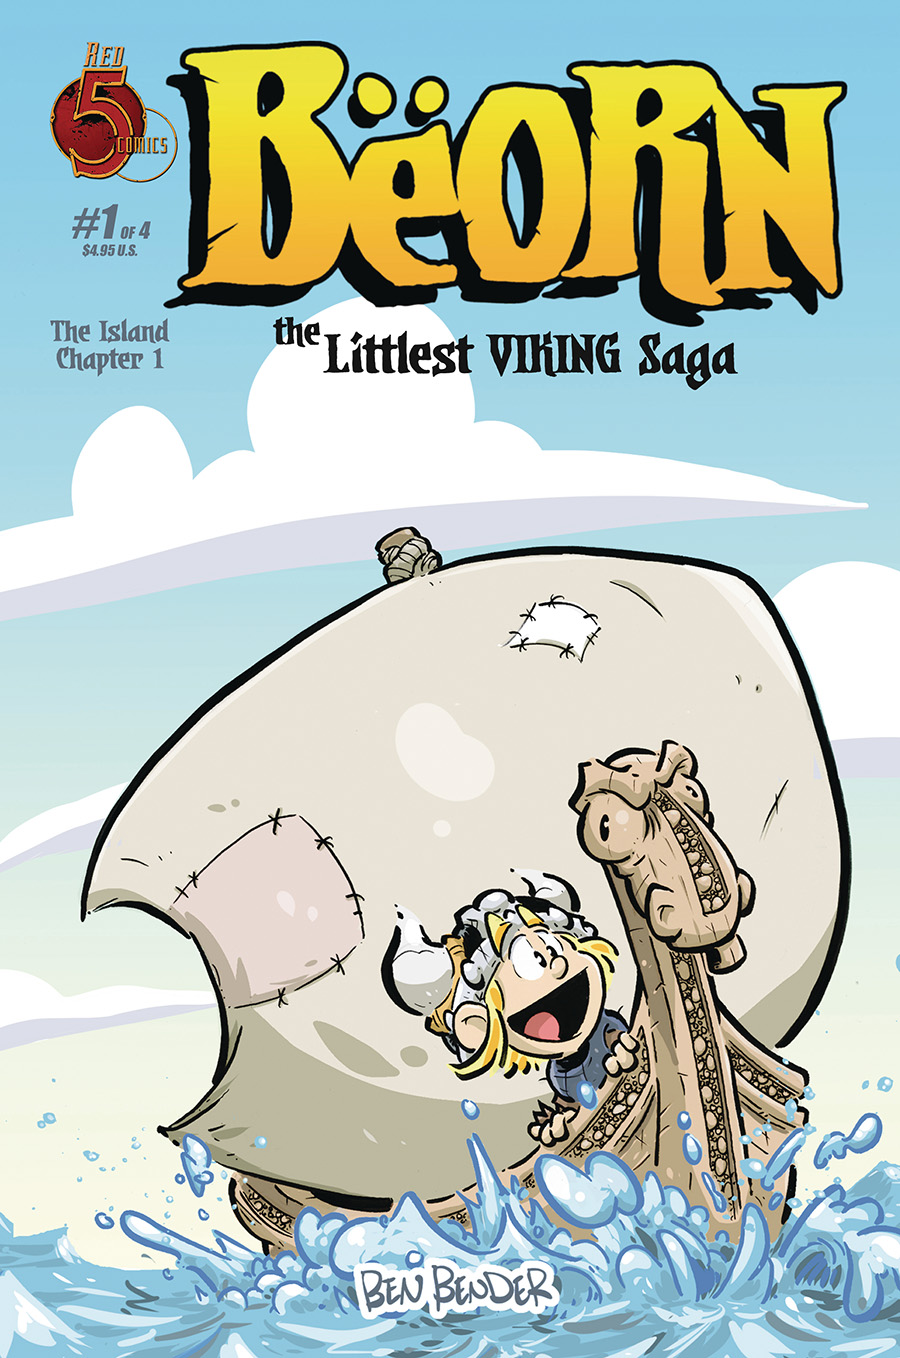 Beorn Littlest Viking Saga #1 